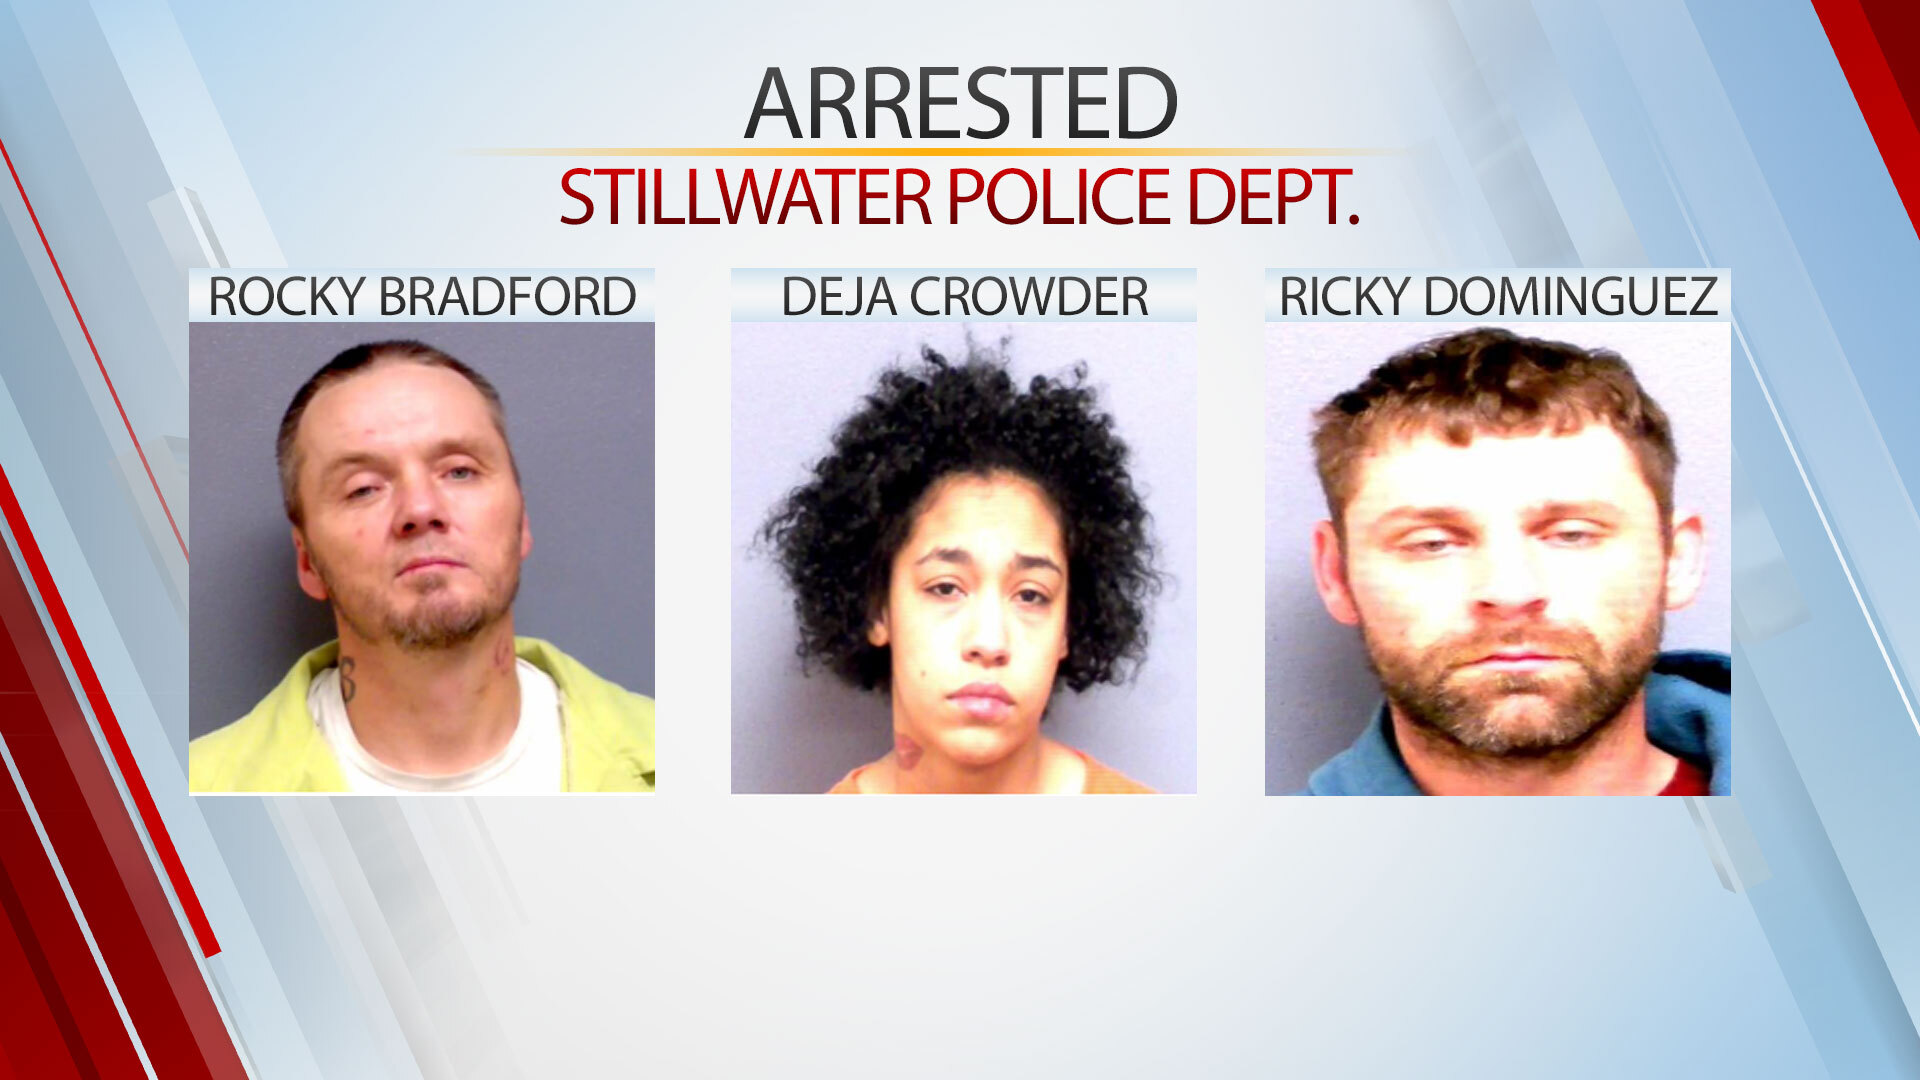 3 Arrested For Allegedly Trafficking Illegal Drugs In Stillwater